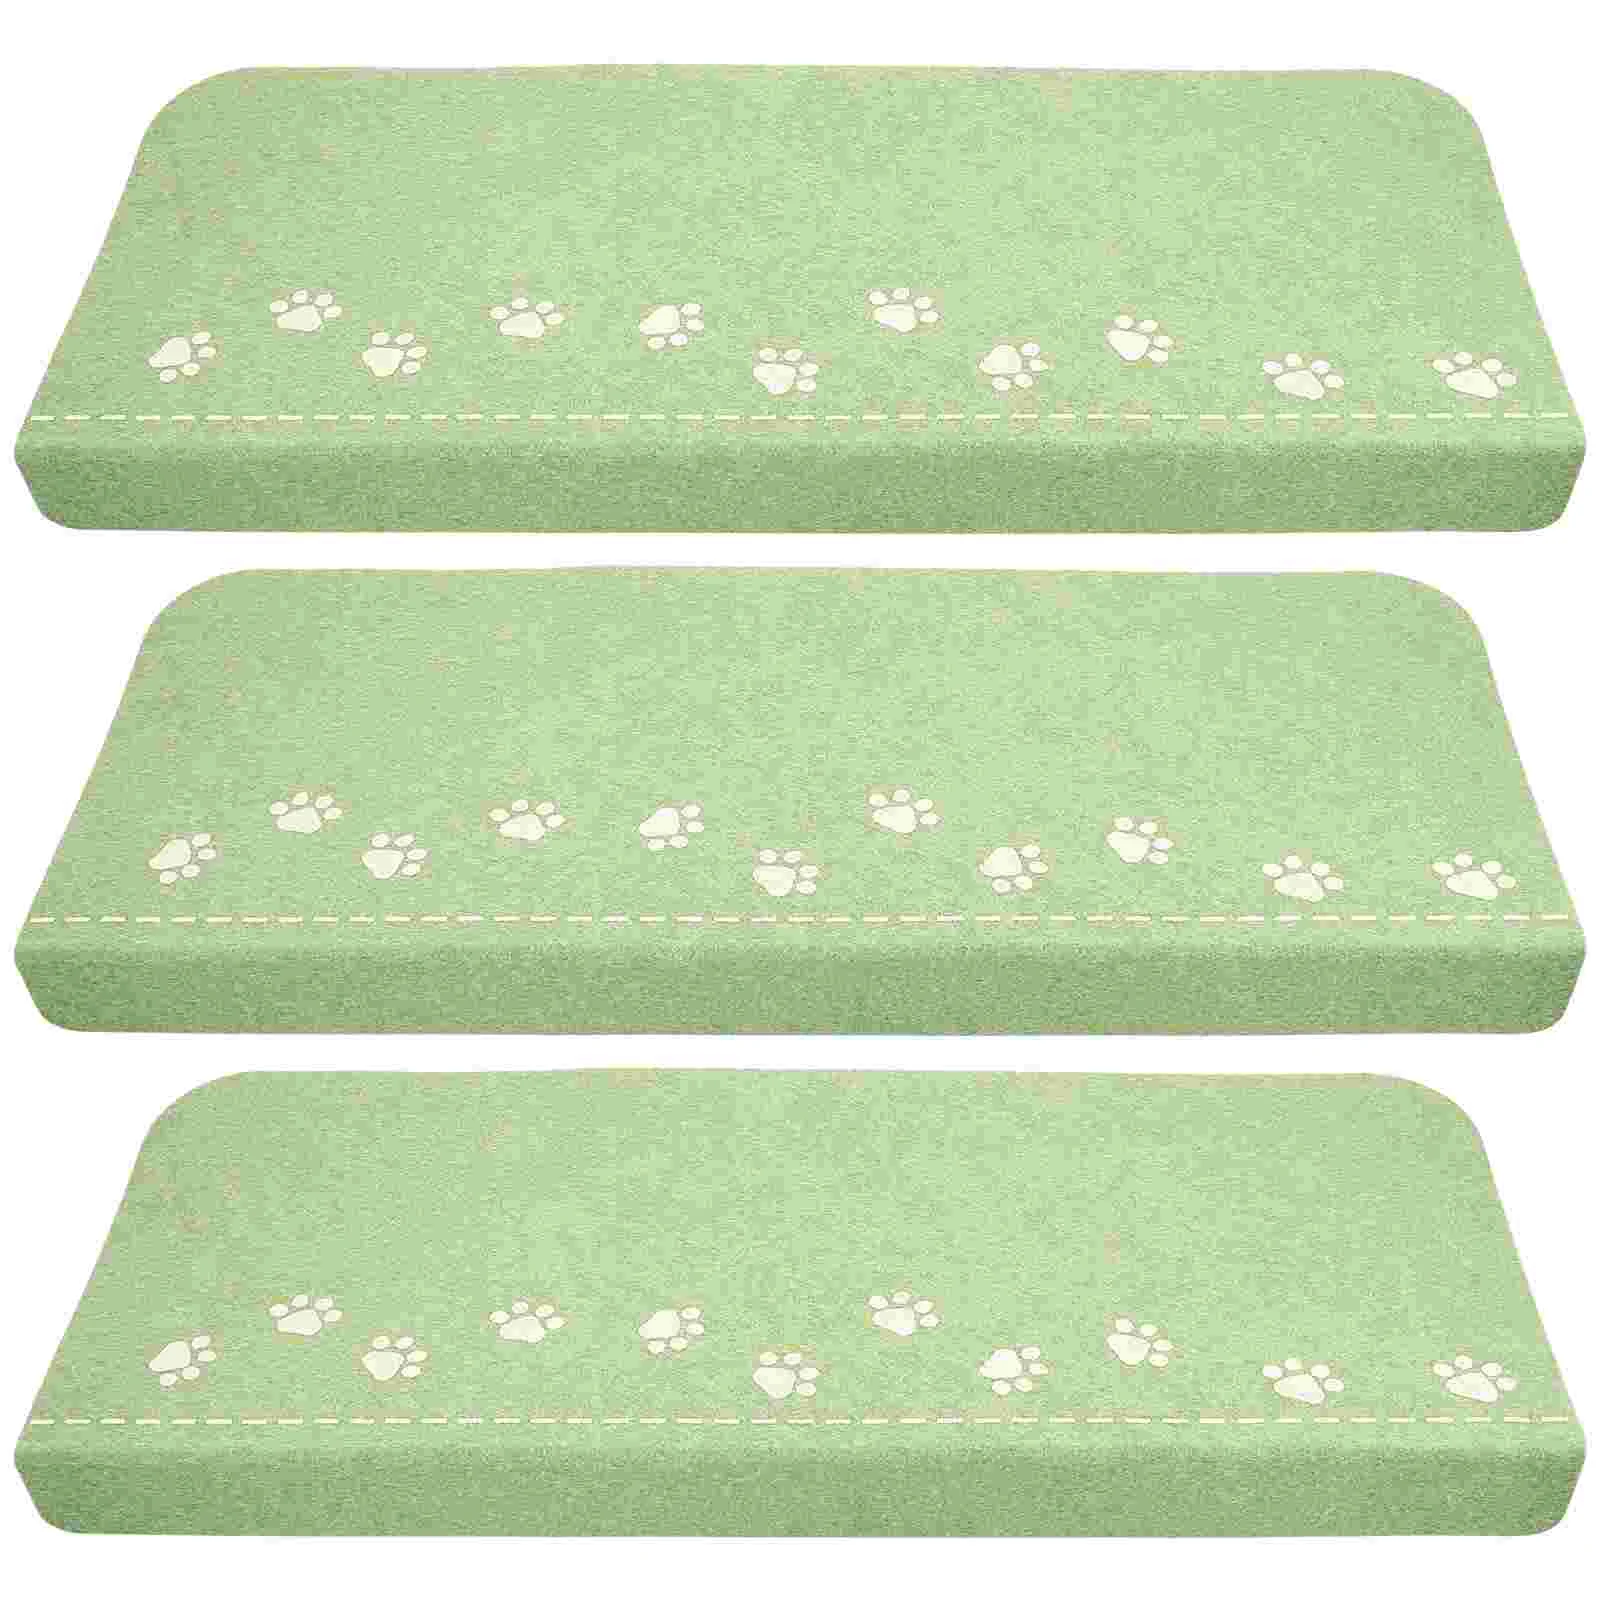 

3 Pcs Luminous Stair Mat Non-slip Carpet Tread Treads Non-skid Step Rug Home Decor Resistant Pad Shine